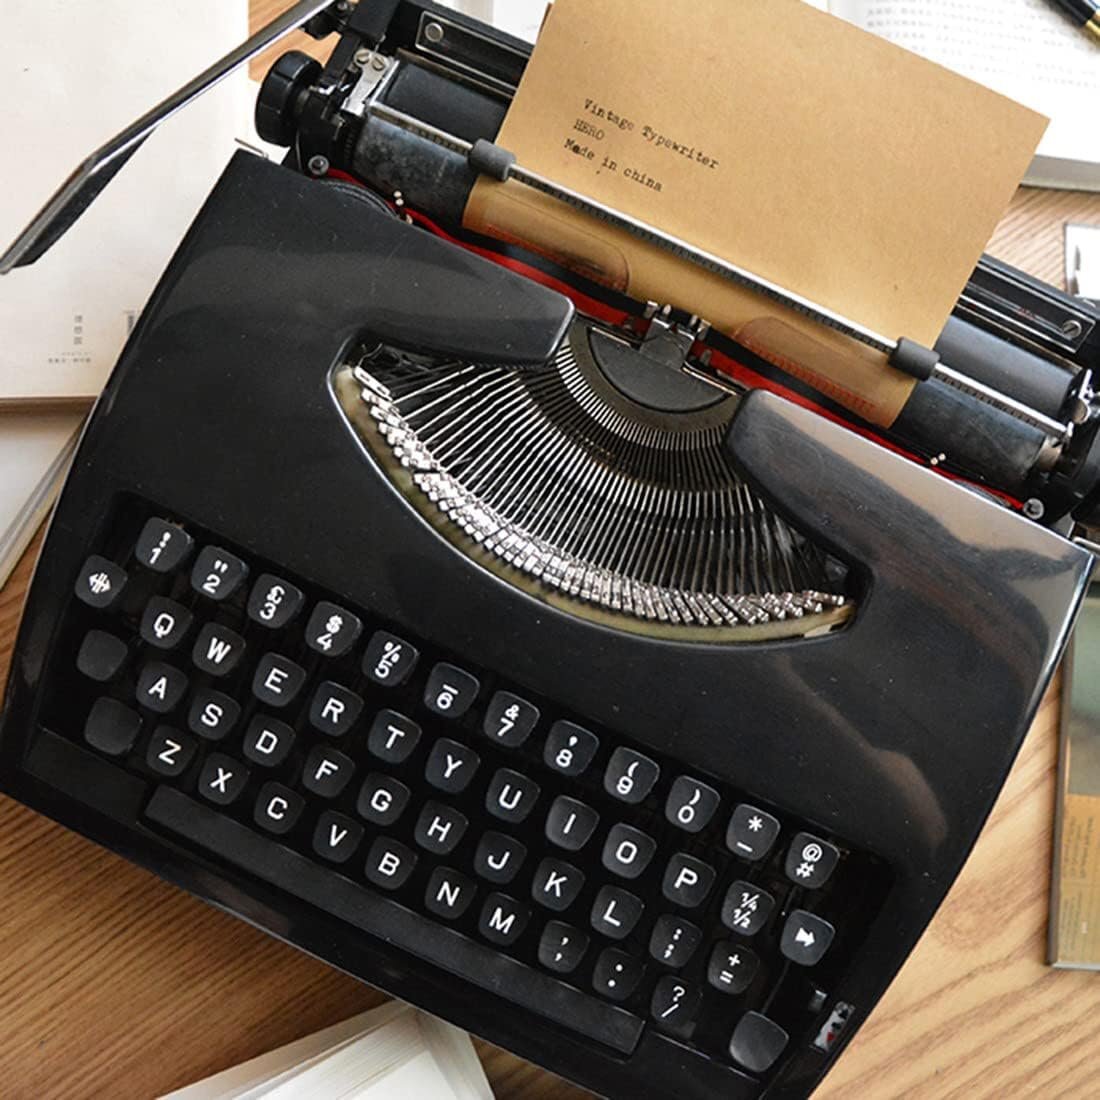  retro Vintage typewriter model, former times while. tradition .. manual typewriter, memory taking ., letter for 